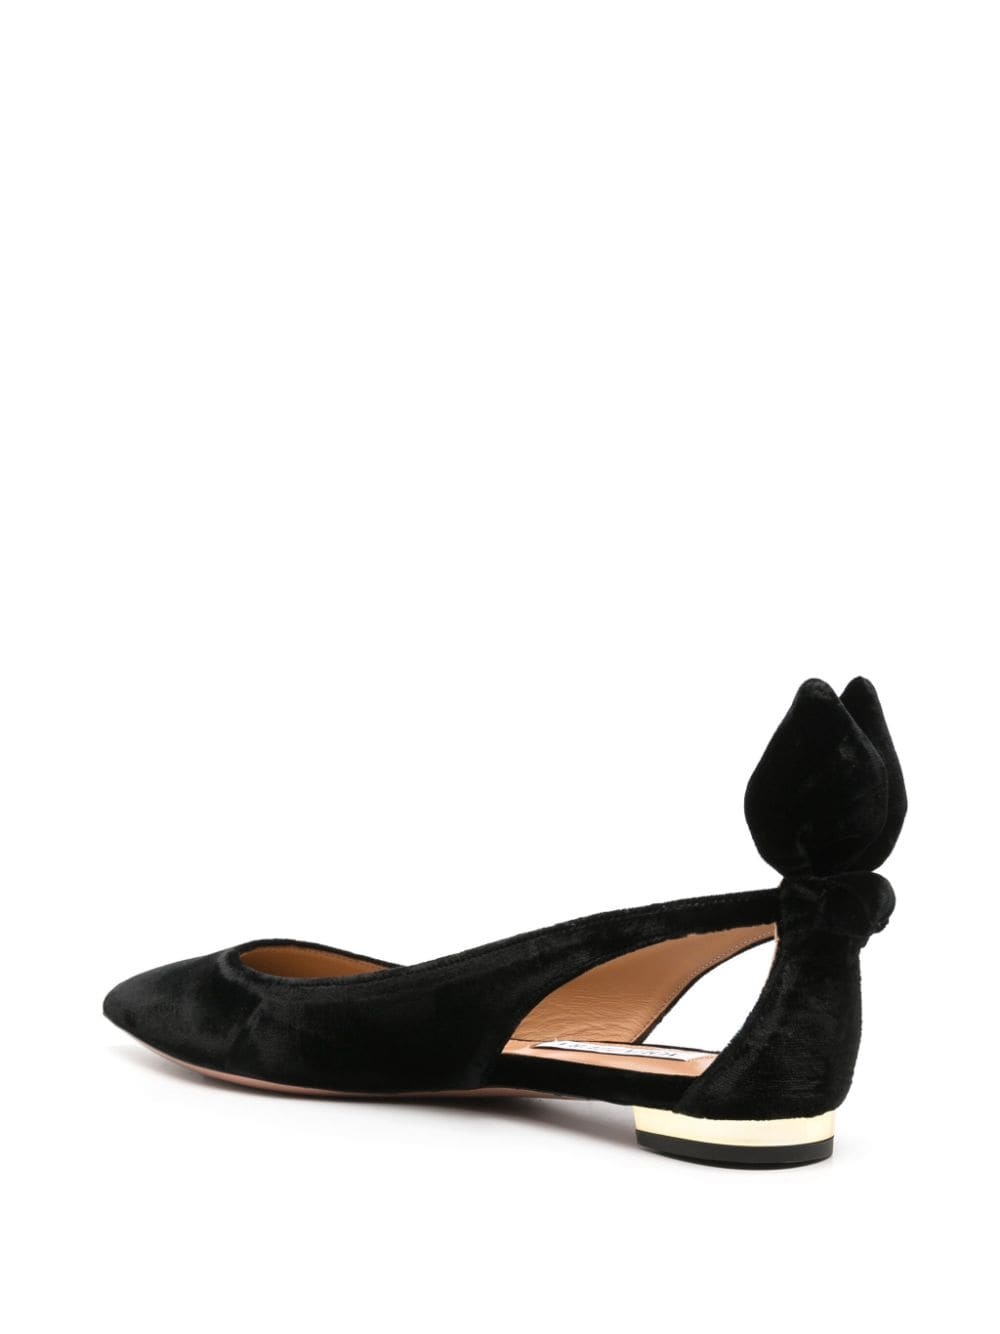 Aquazzura Bow Tie leather ballerina shoes - Black